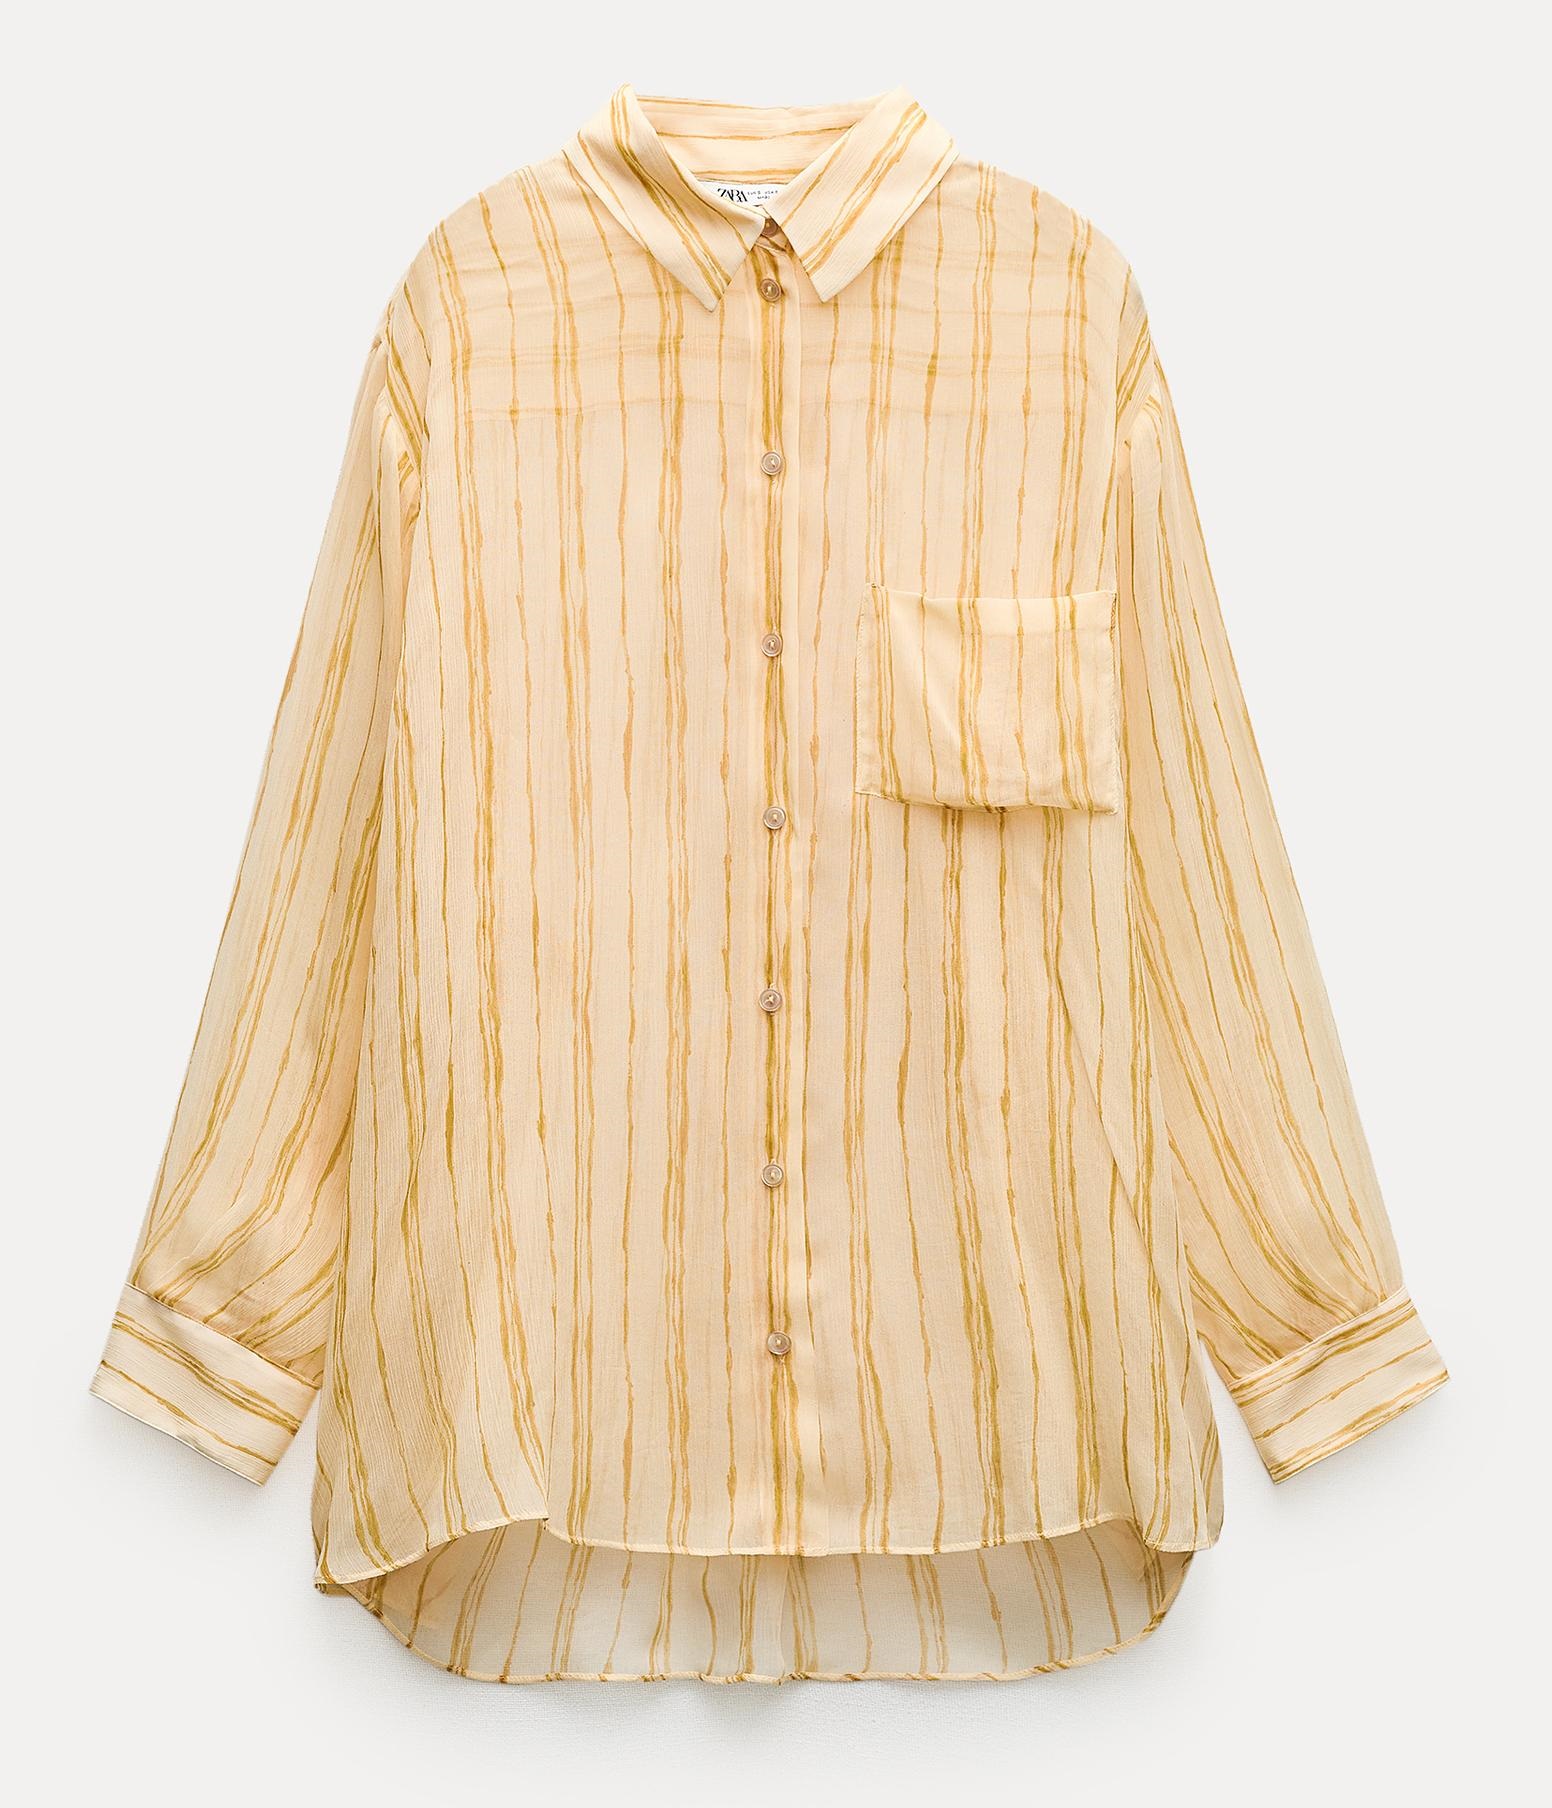 Рубашка Zara Zw Collection Striped With Pocket, мультиколор рубашка zara zw collection with ruffled collar светло розовый